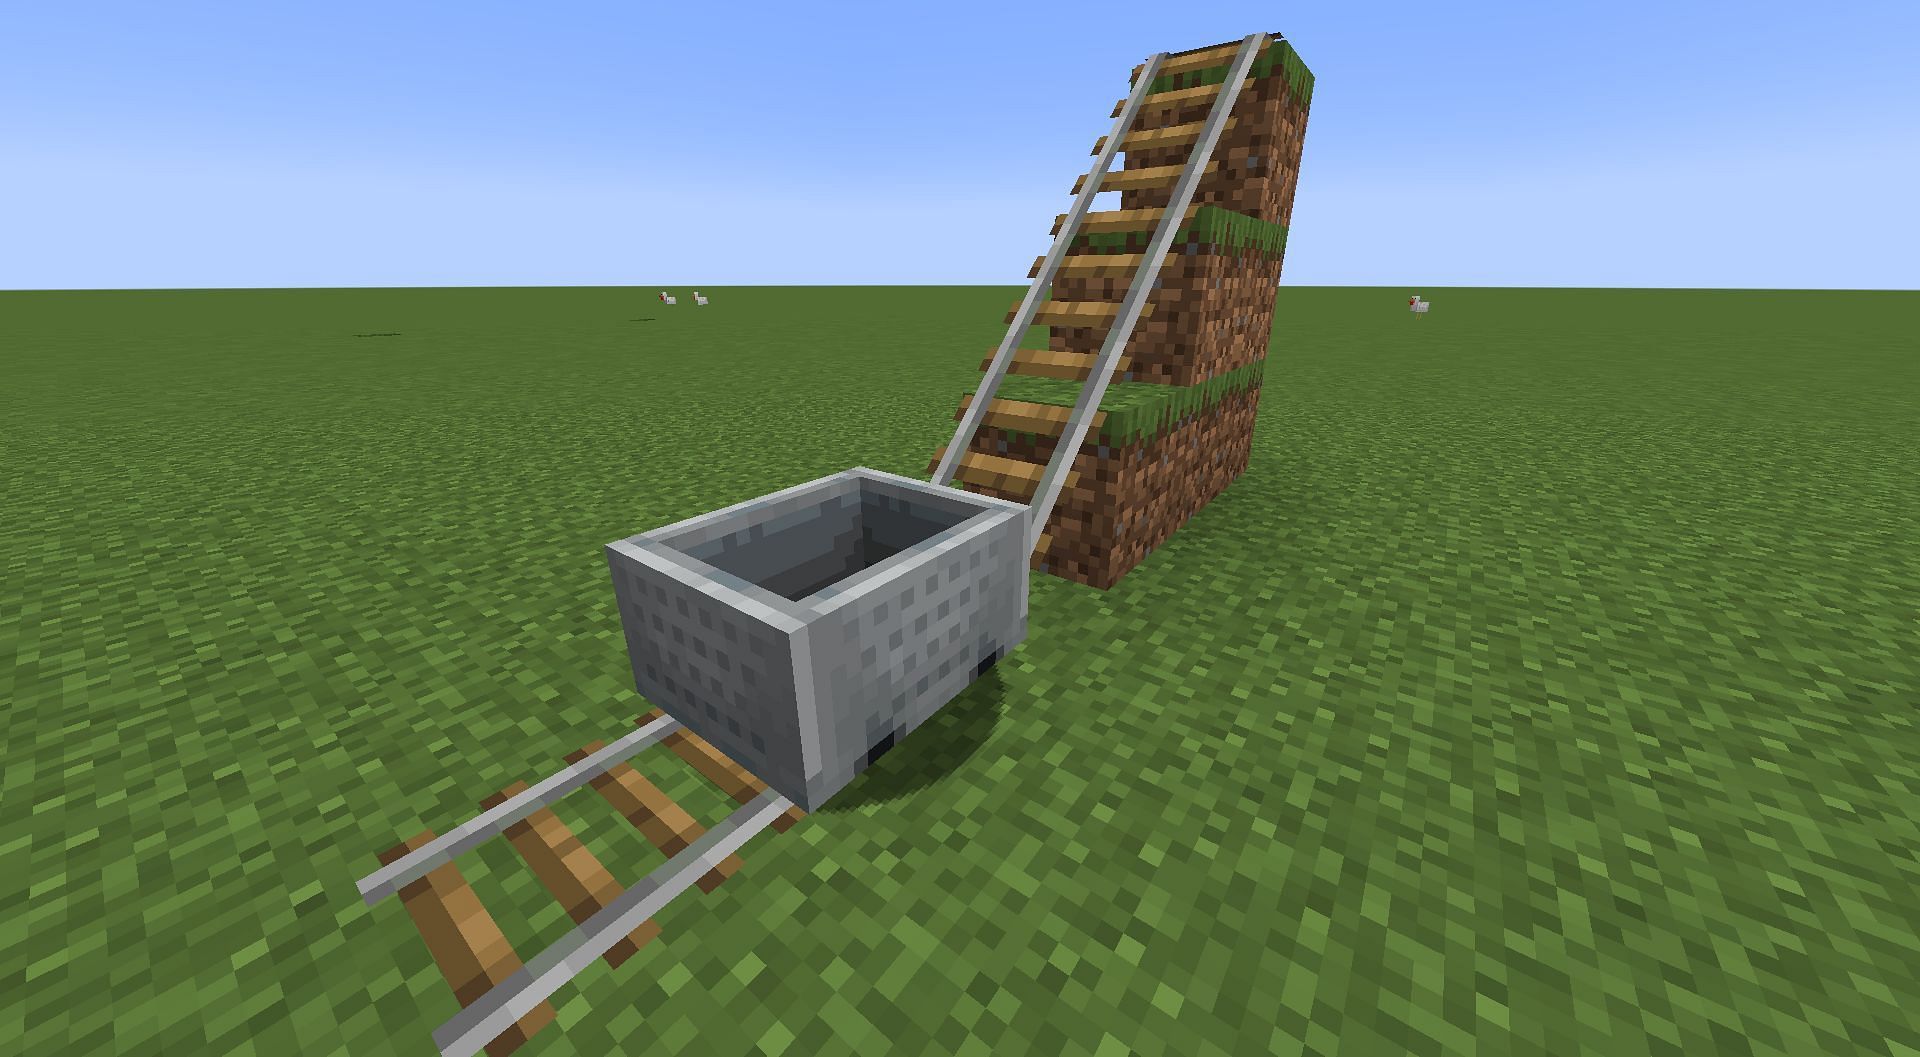 Normal Rails (Image via Minecraft)